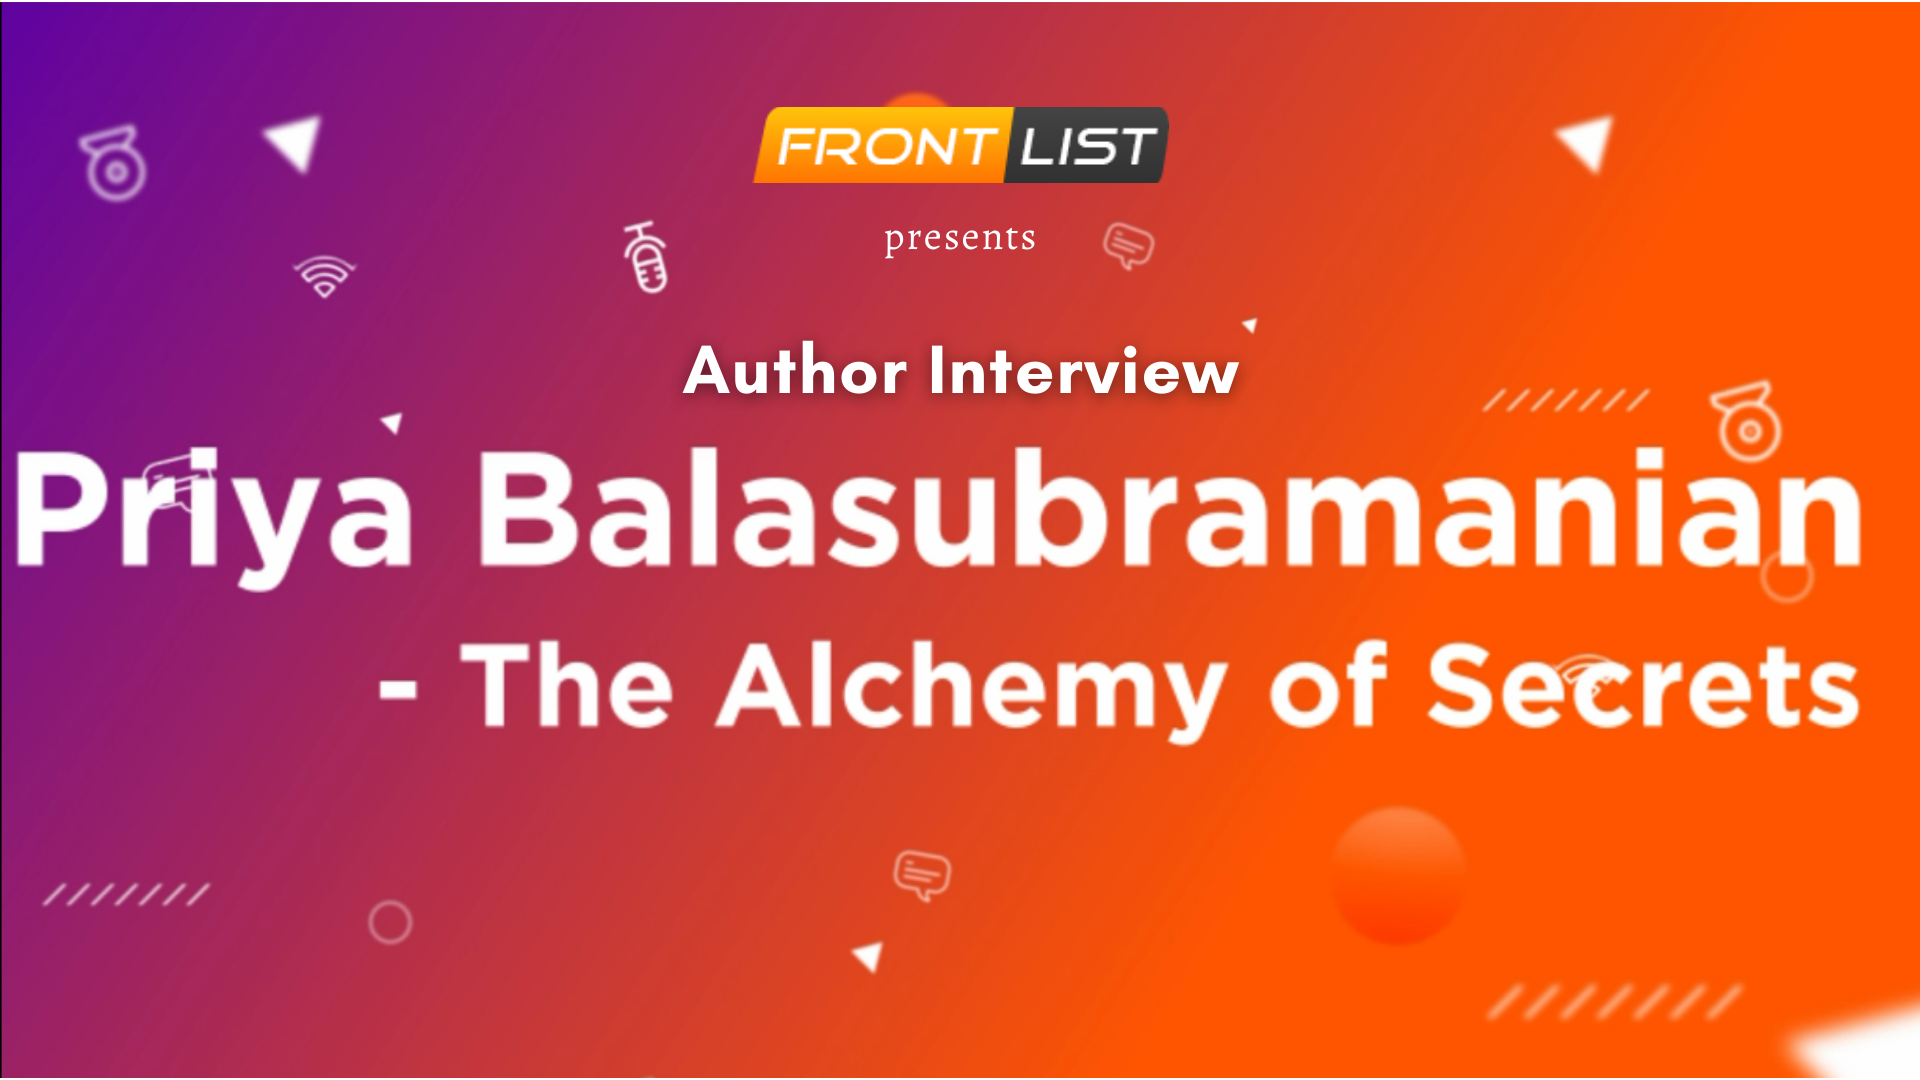 Author Priya Balasubramanian | The Alchemy of Secrets | INTERVIEW